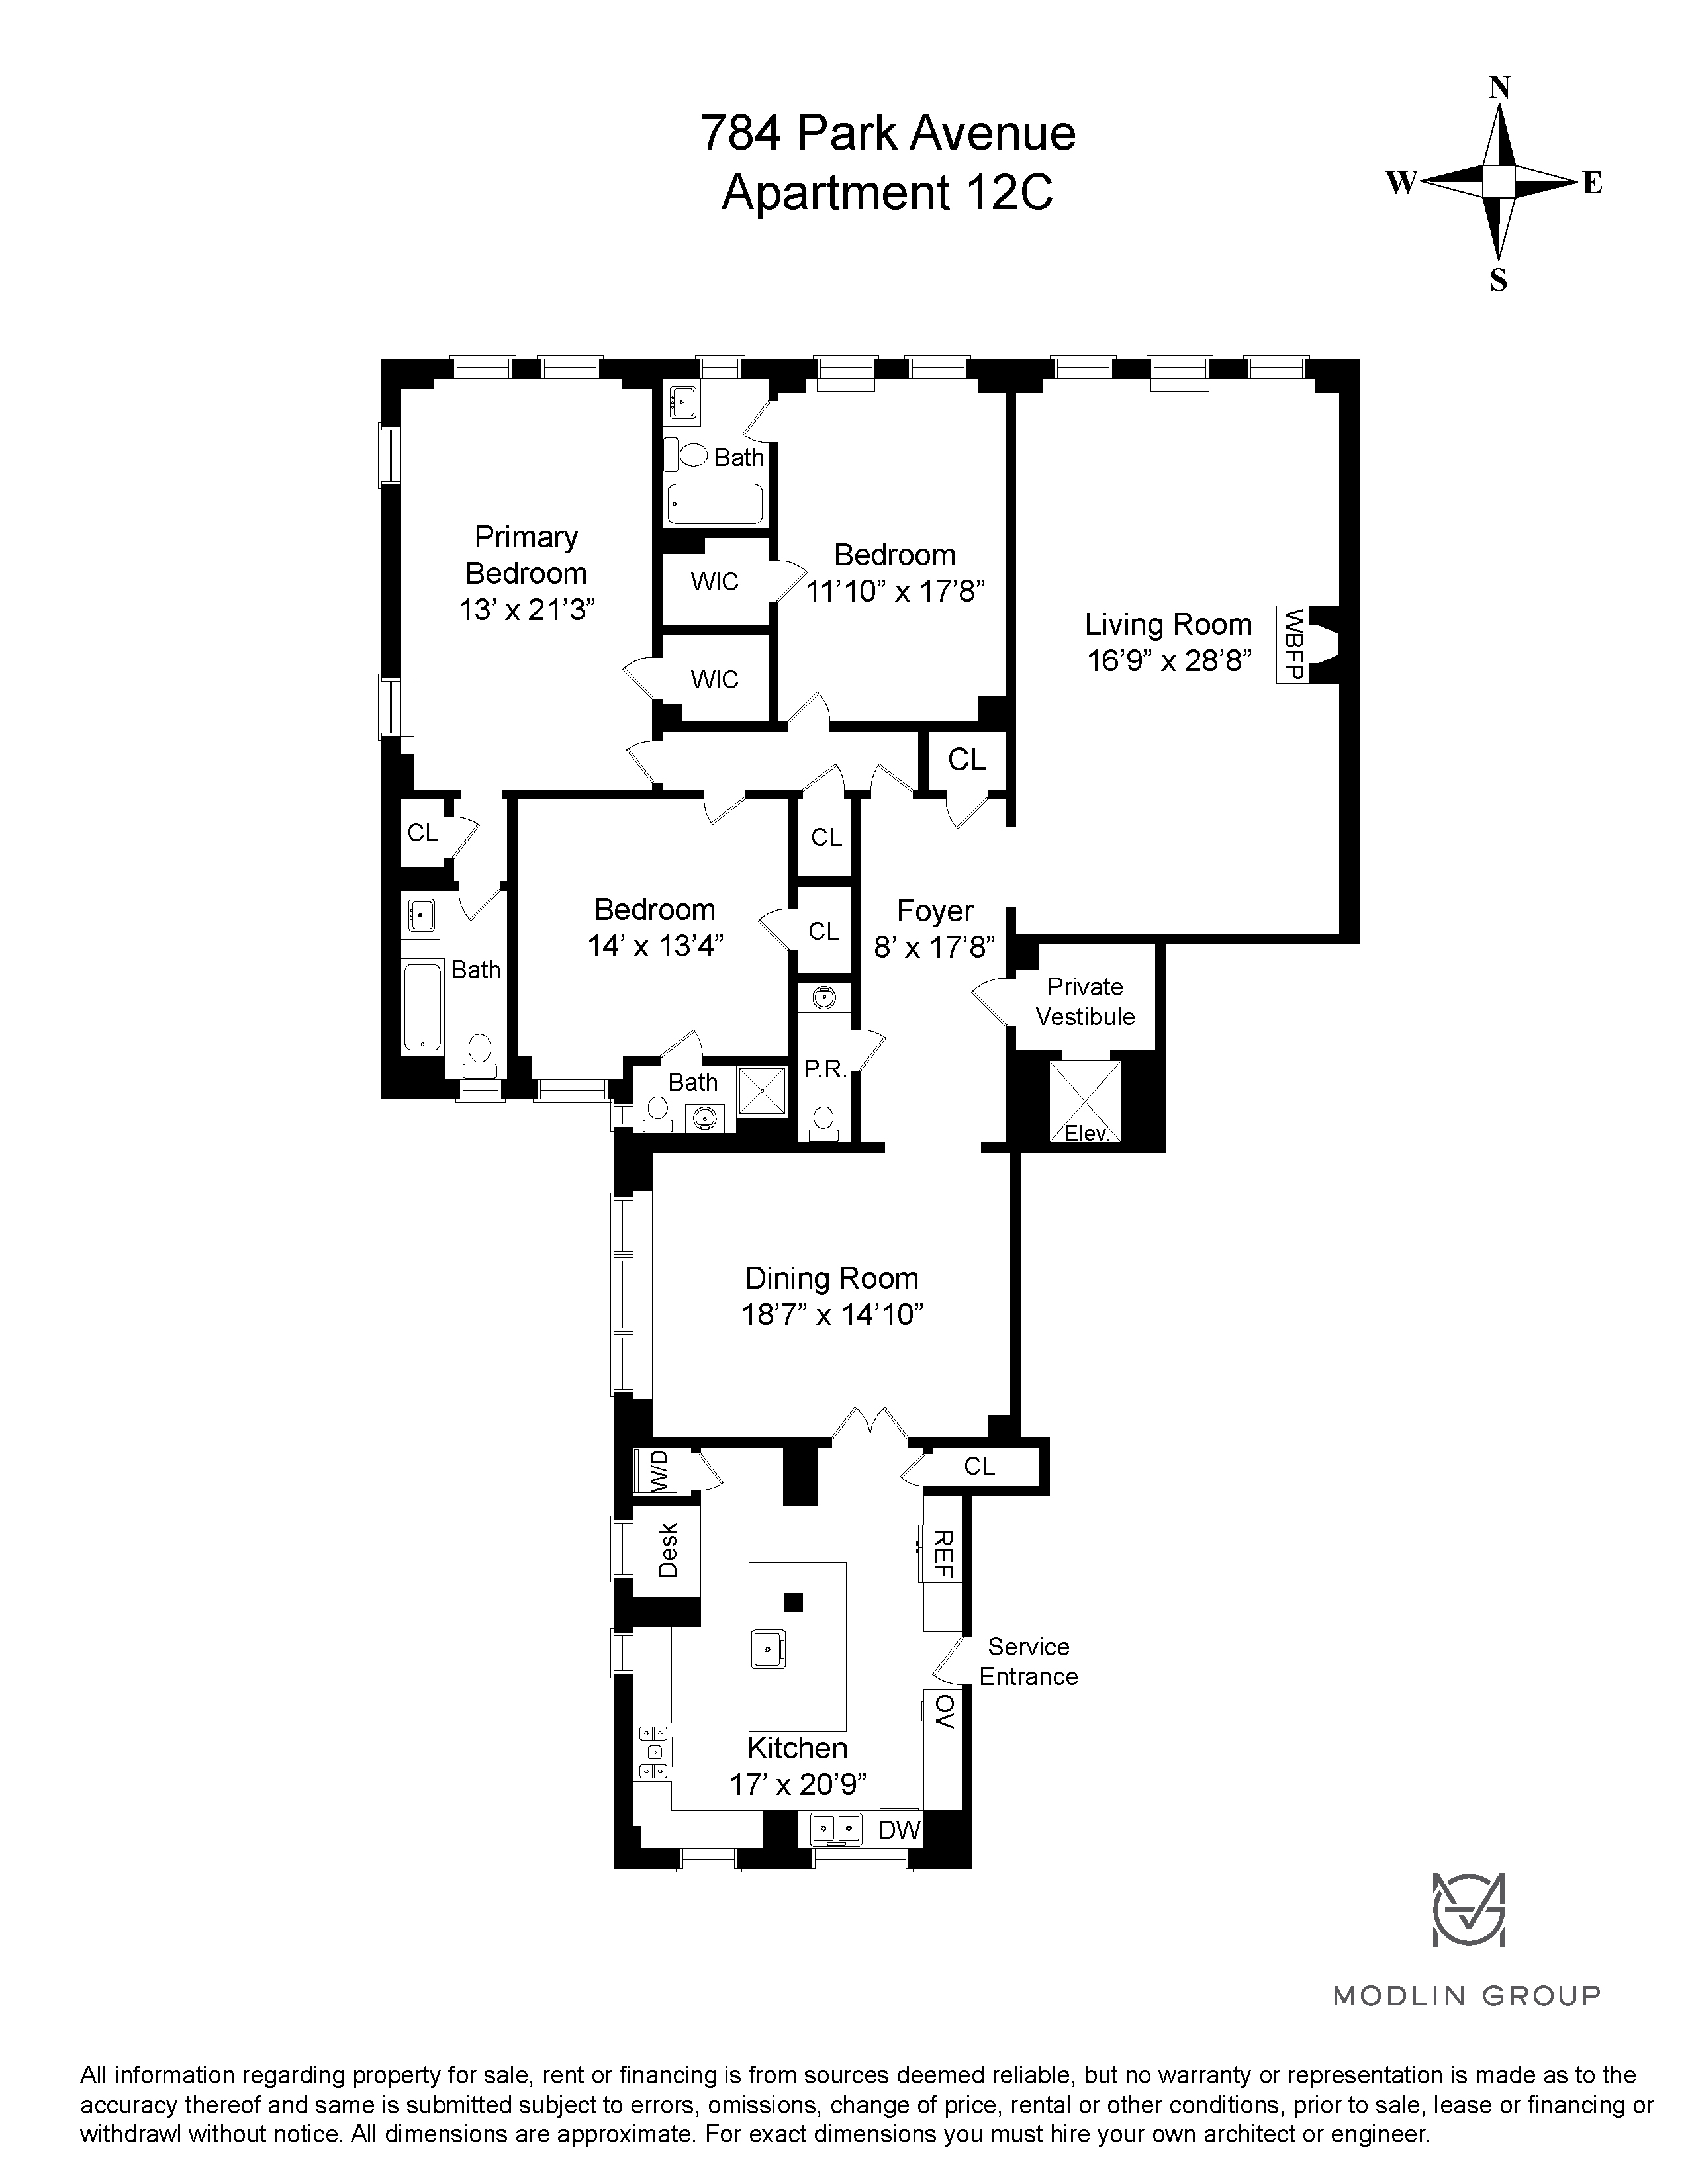 Floorplan for 784 Park Avenue, 12C